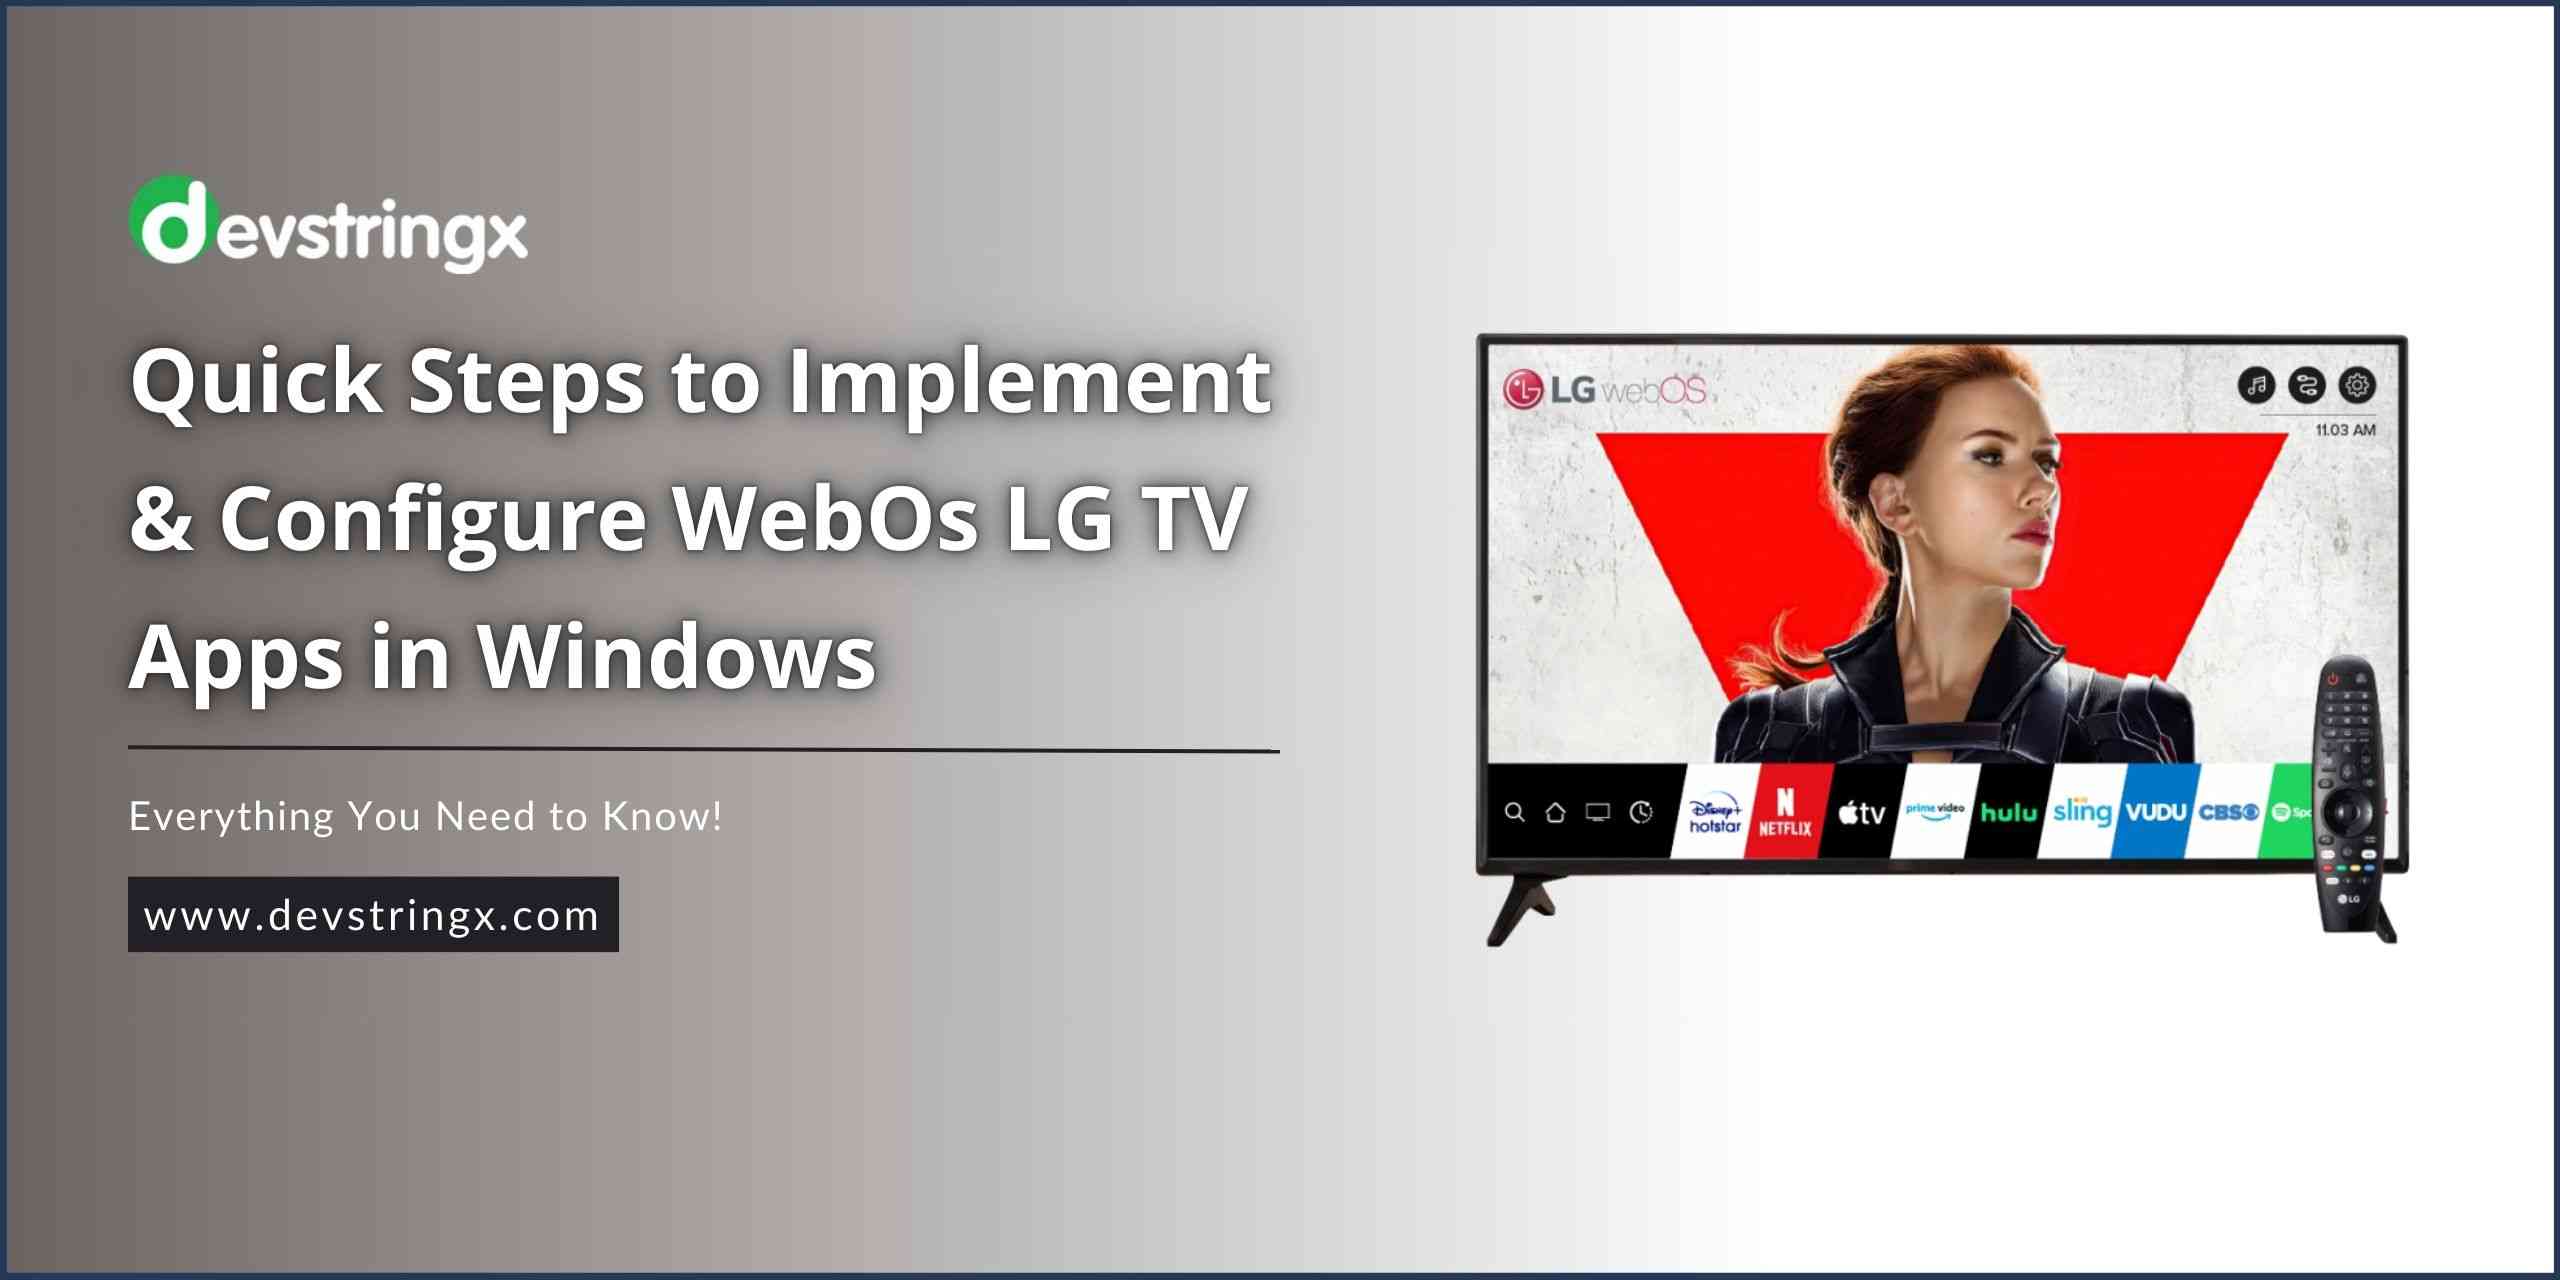 Feature image for LG TV App Development blog